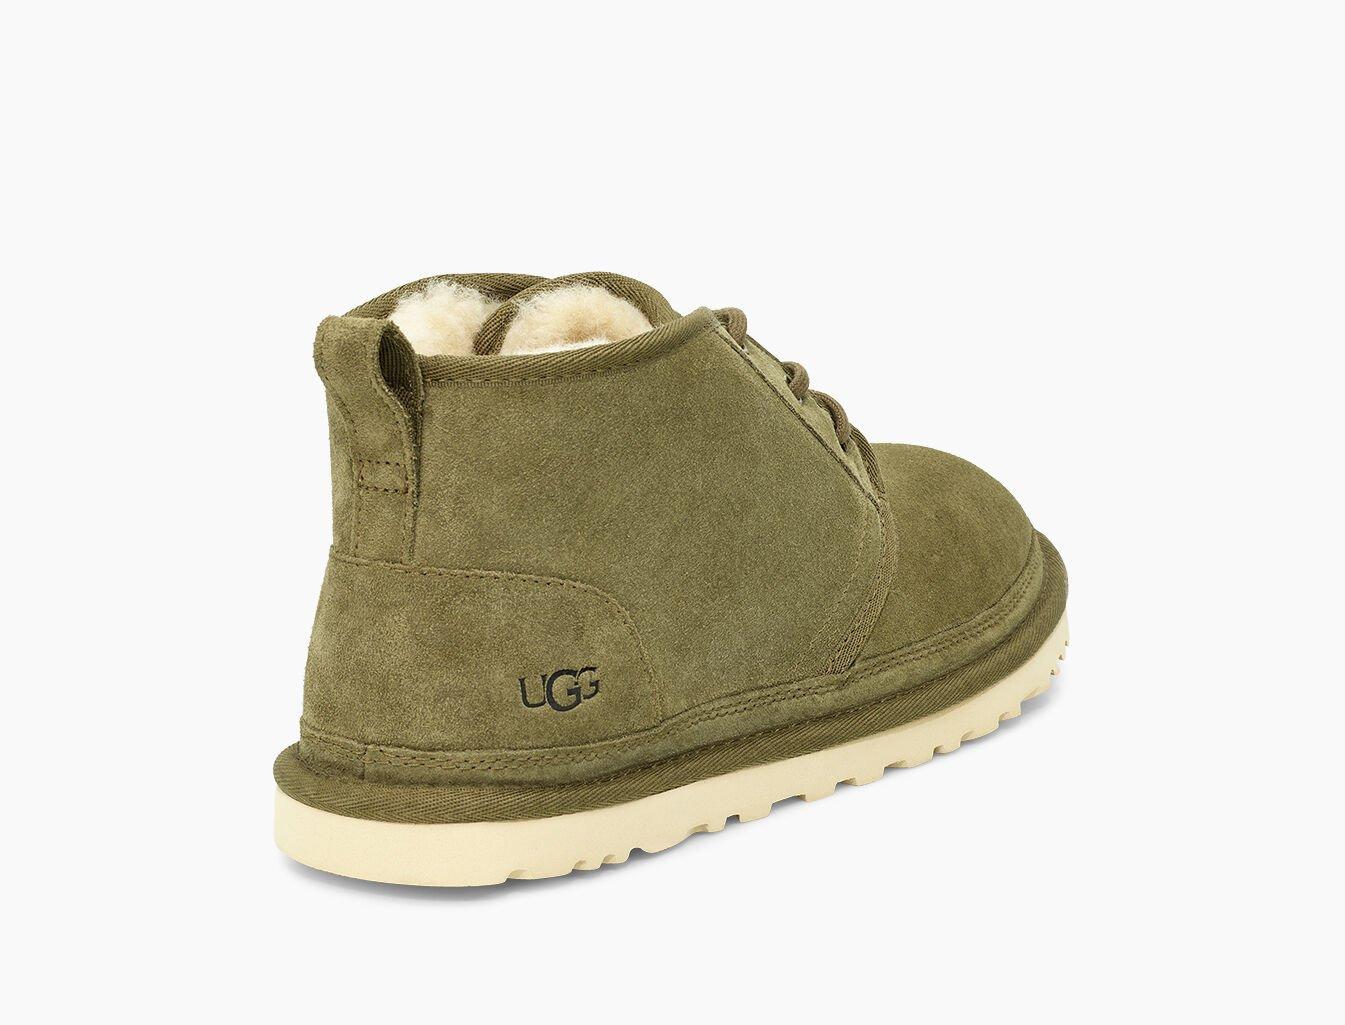 UGG Wool Neumel Boot in Moss Green (Green) for Men - Lyst